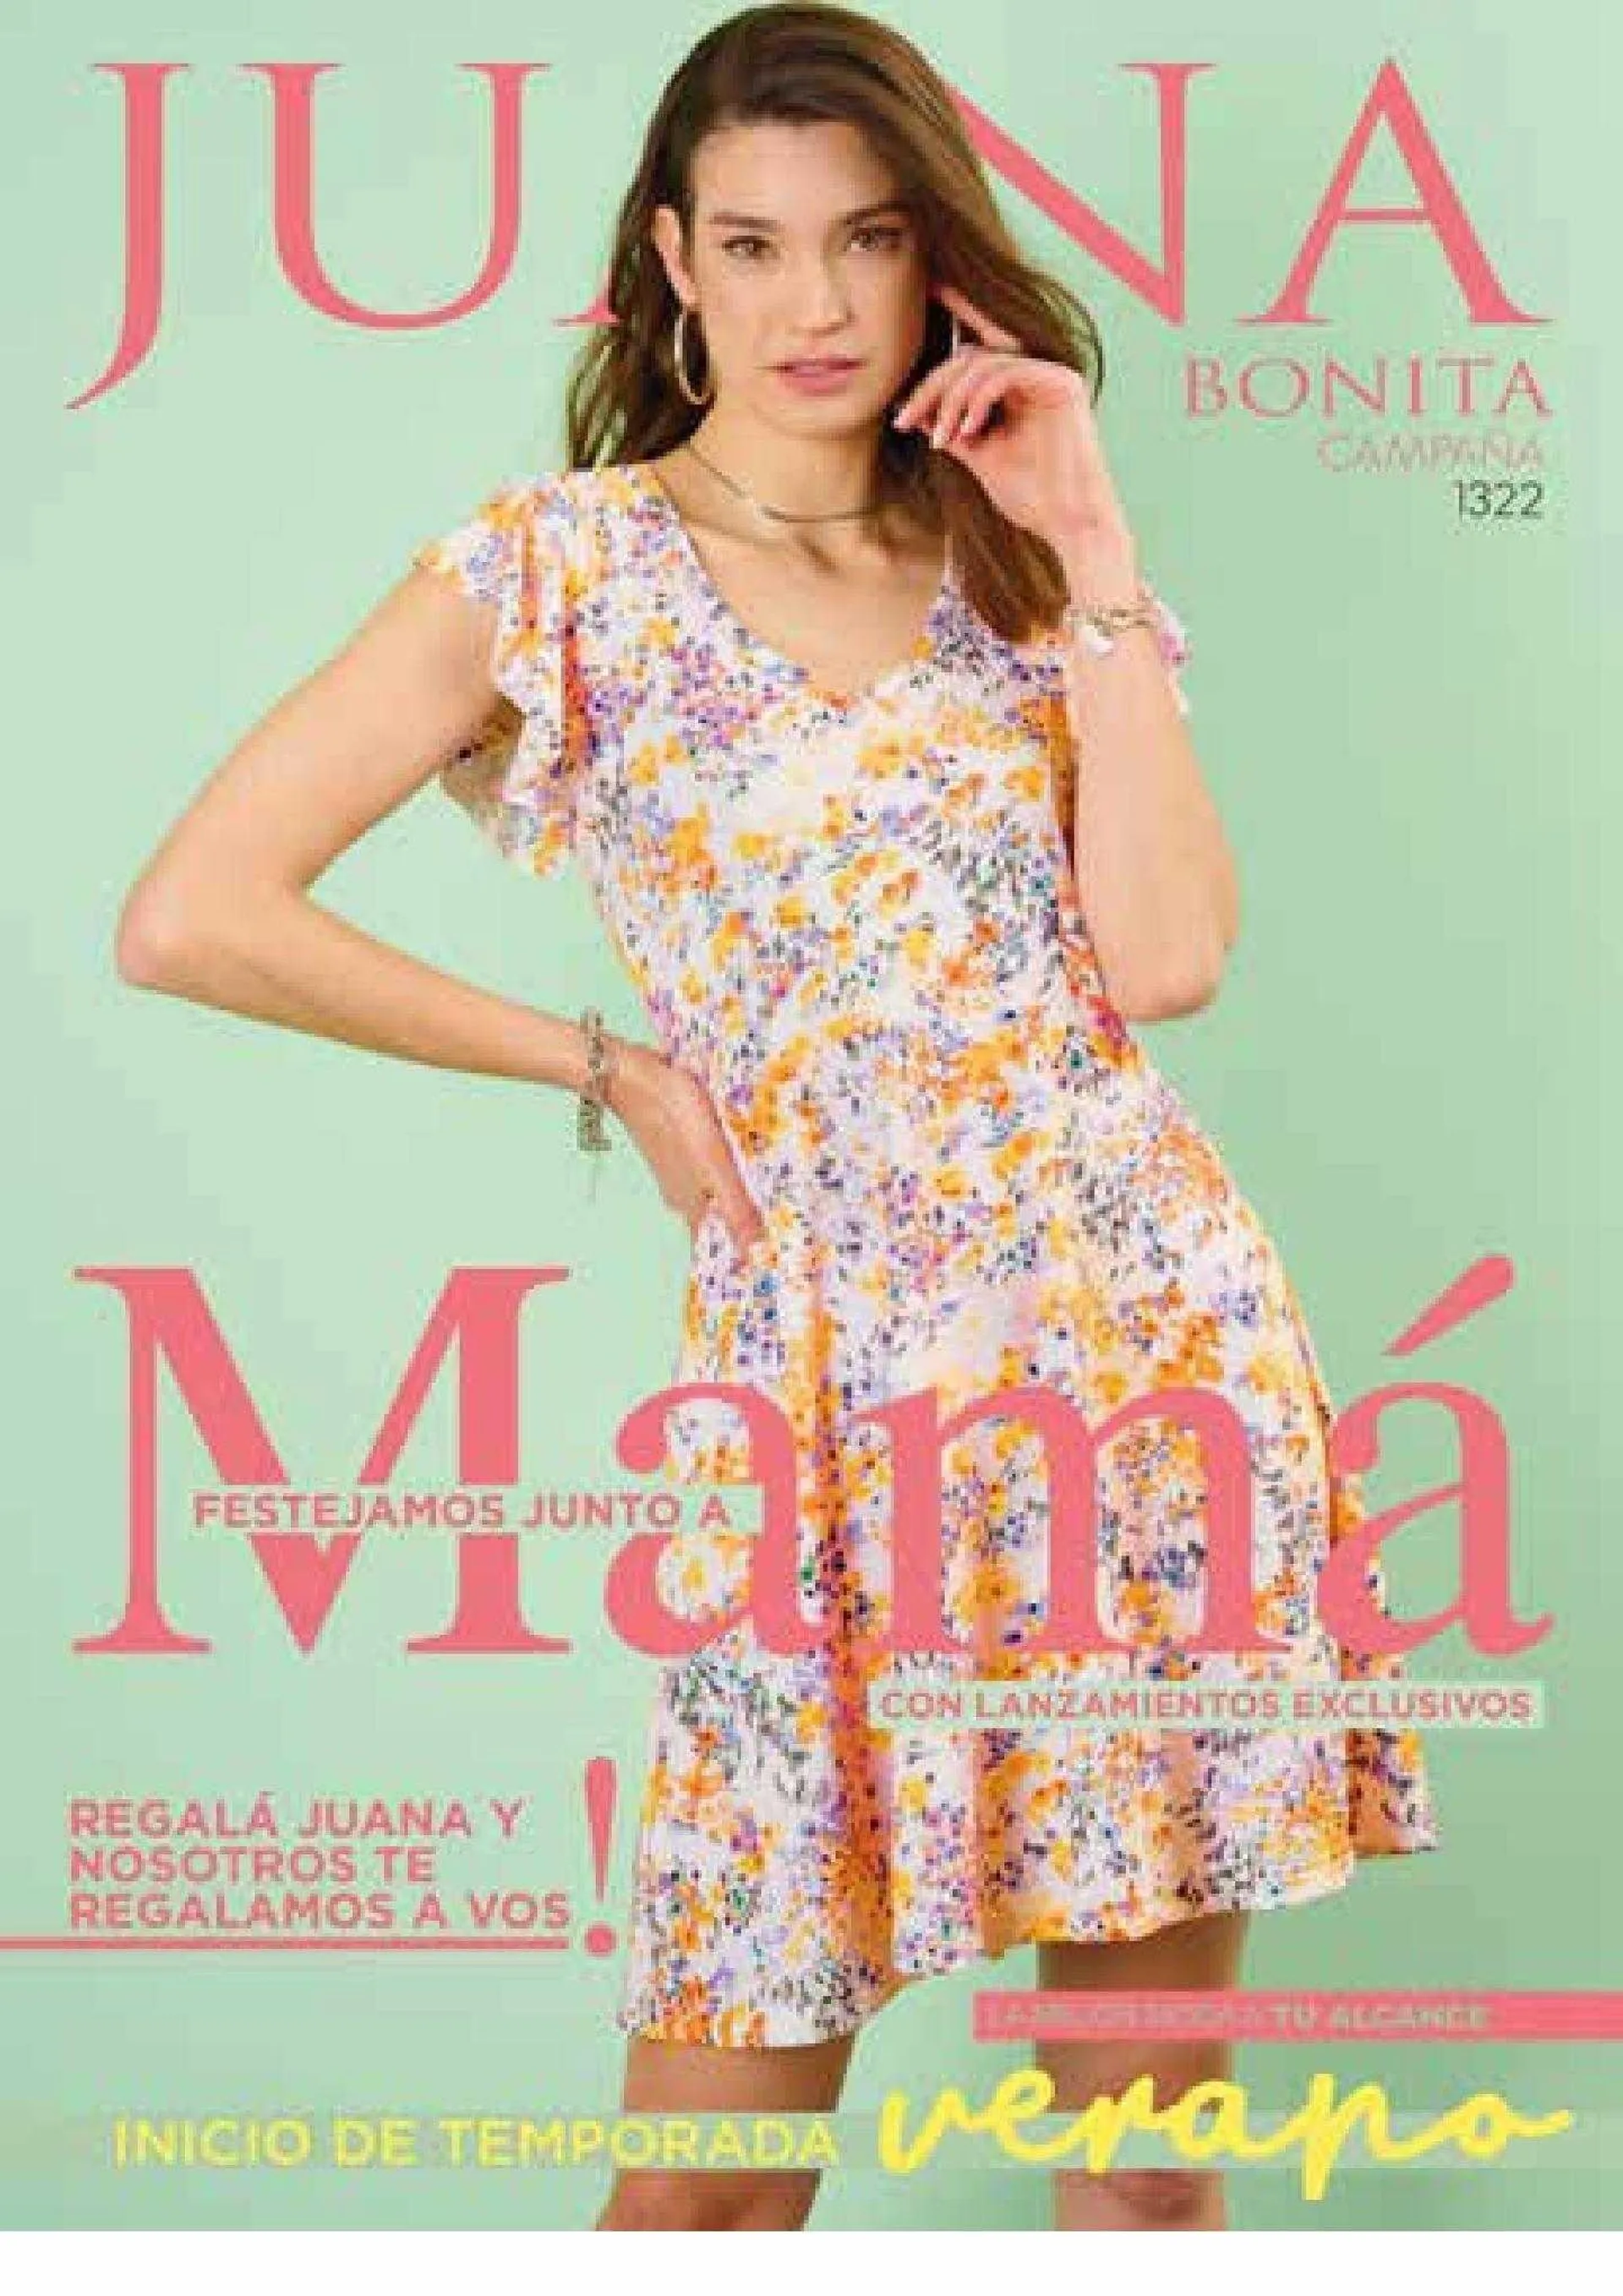 Catálogo Juana Bonita - 1